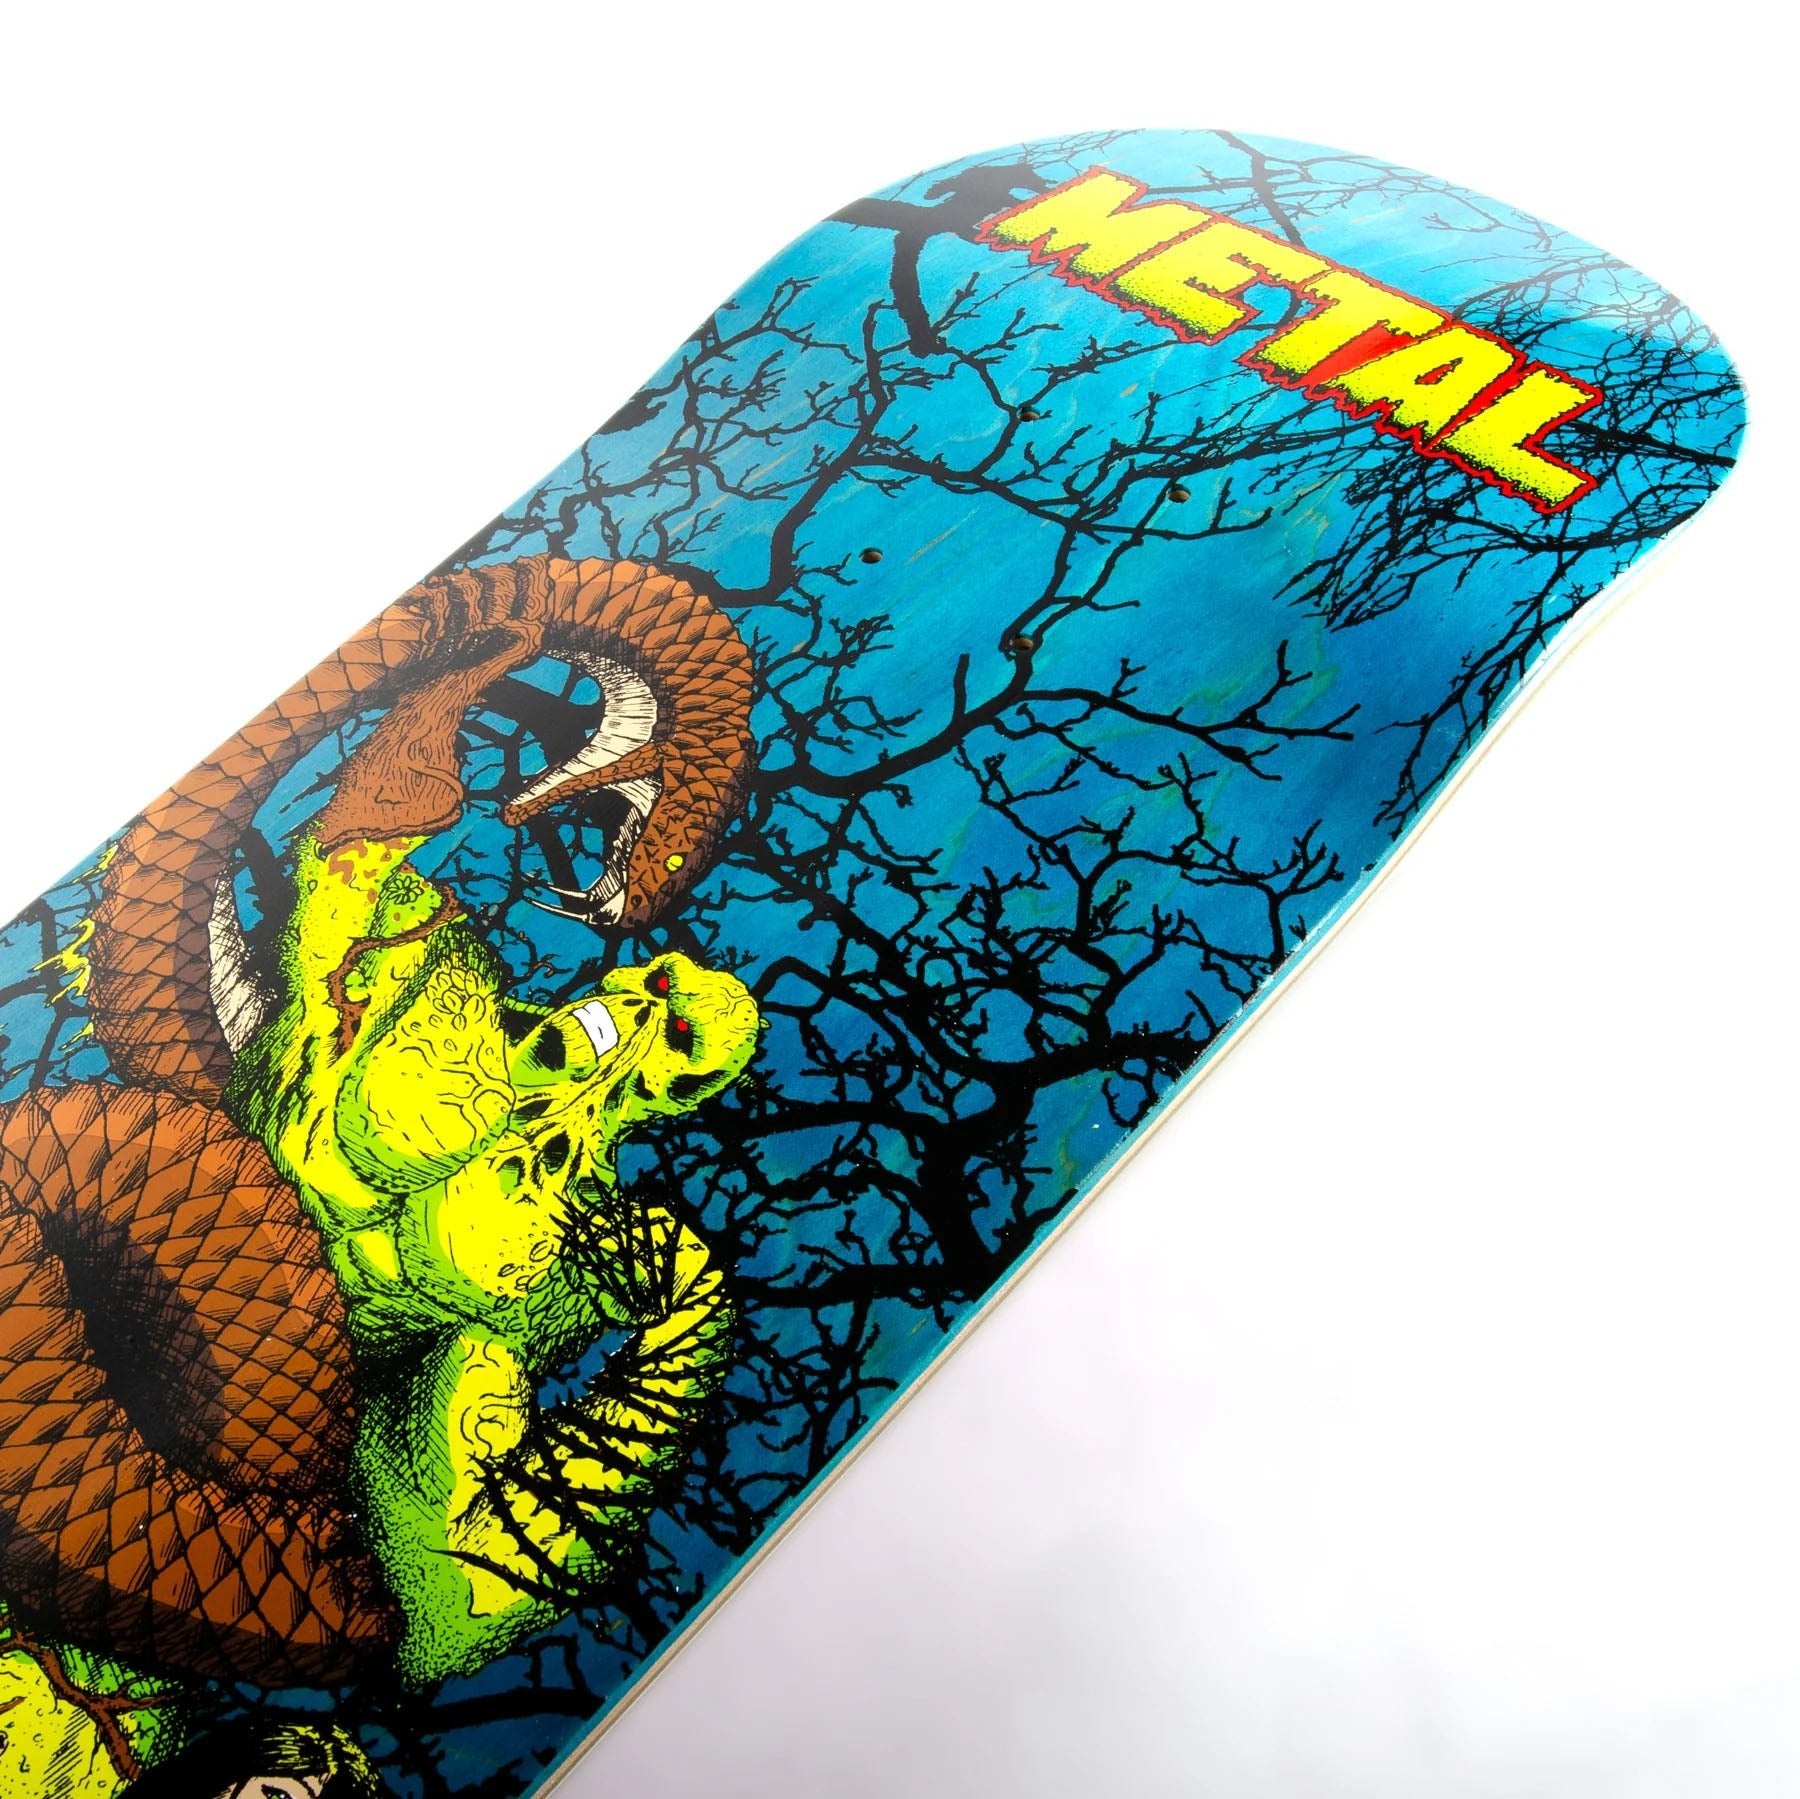 Metal Fred Gall Swamp Thing Deck (8.5") - Tiki Room Skateboards - 3